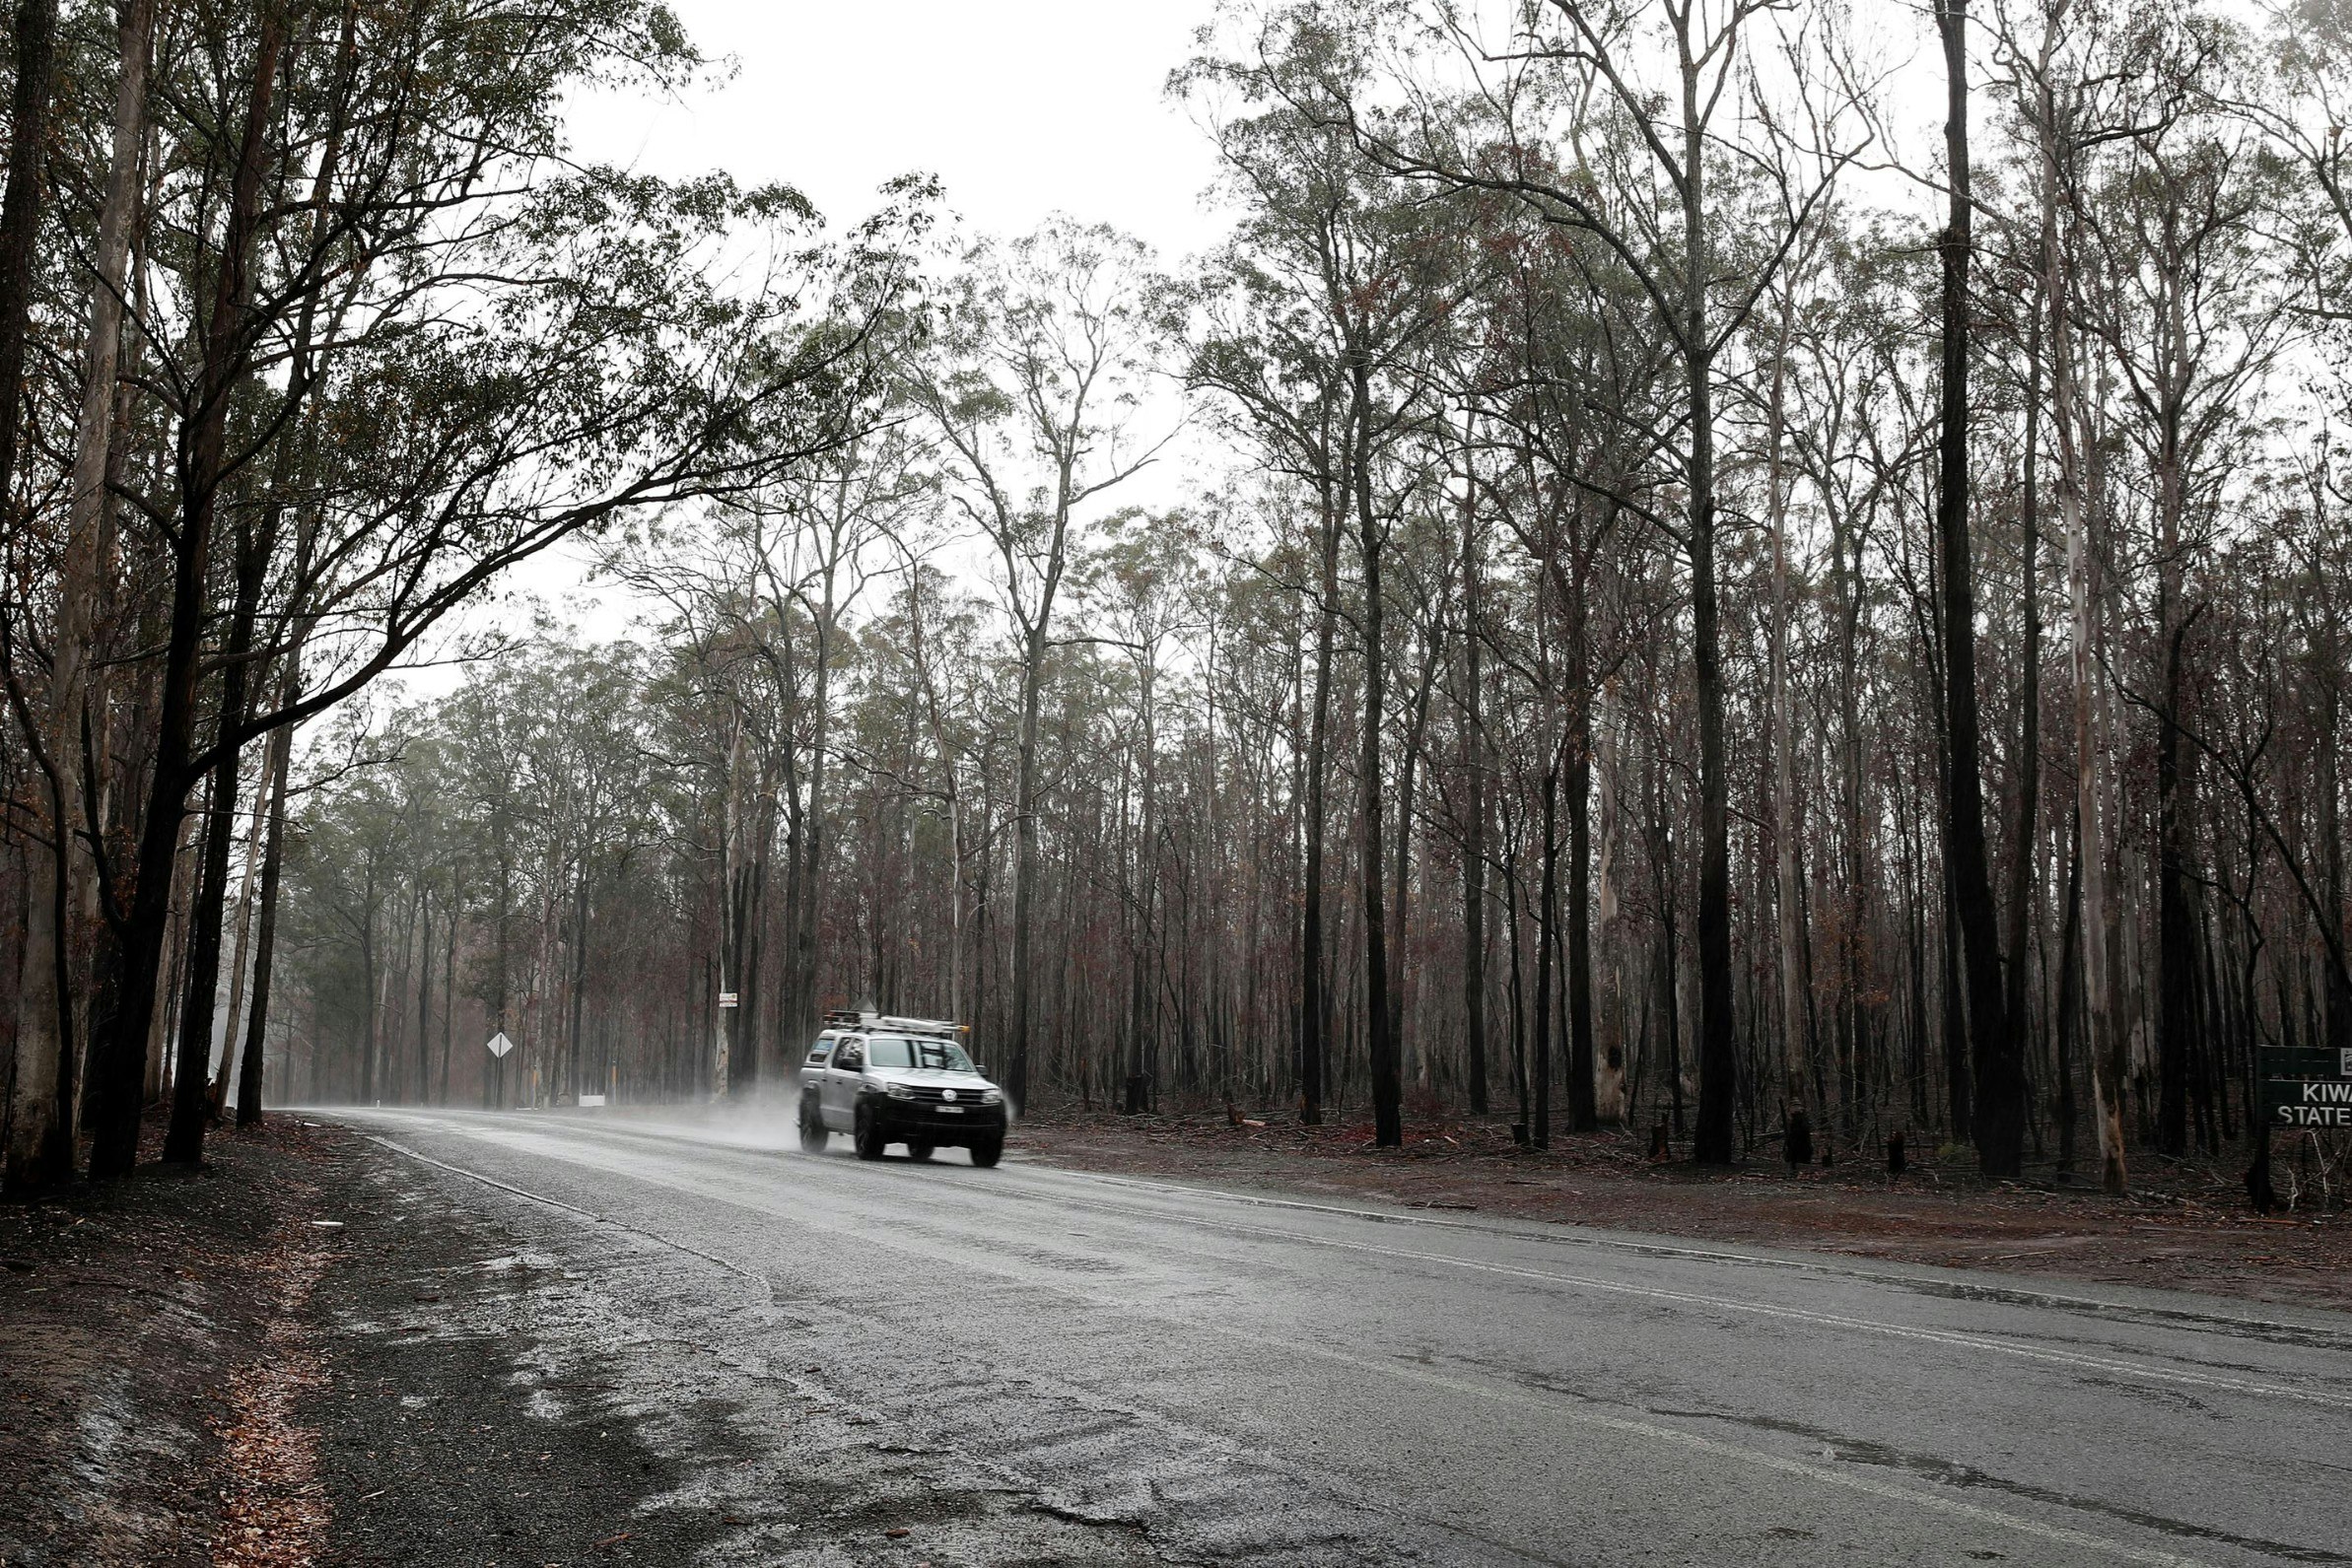 A car driving through a forest in the rain in Australia